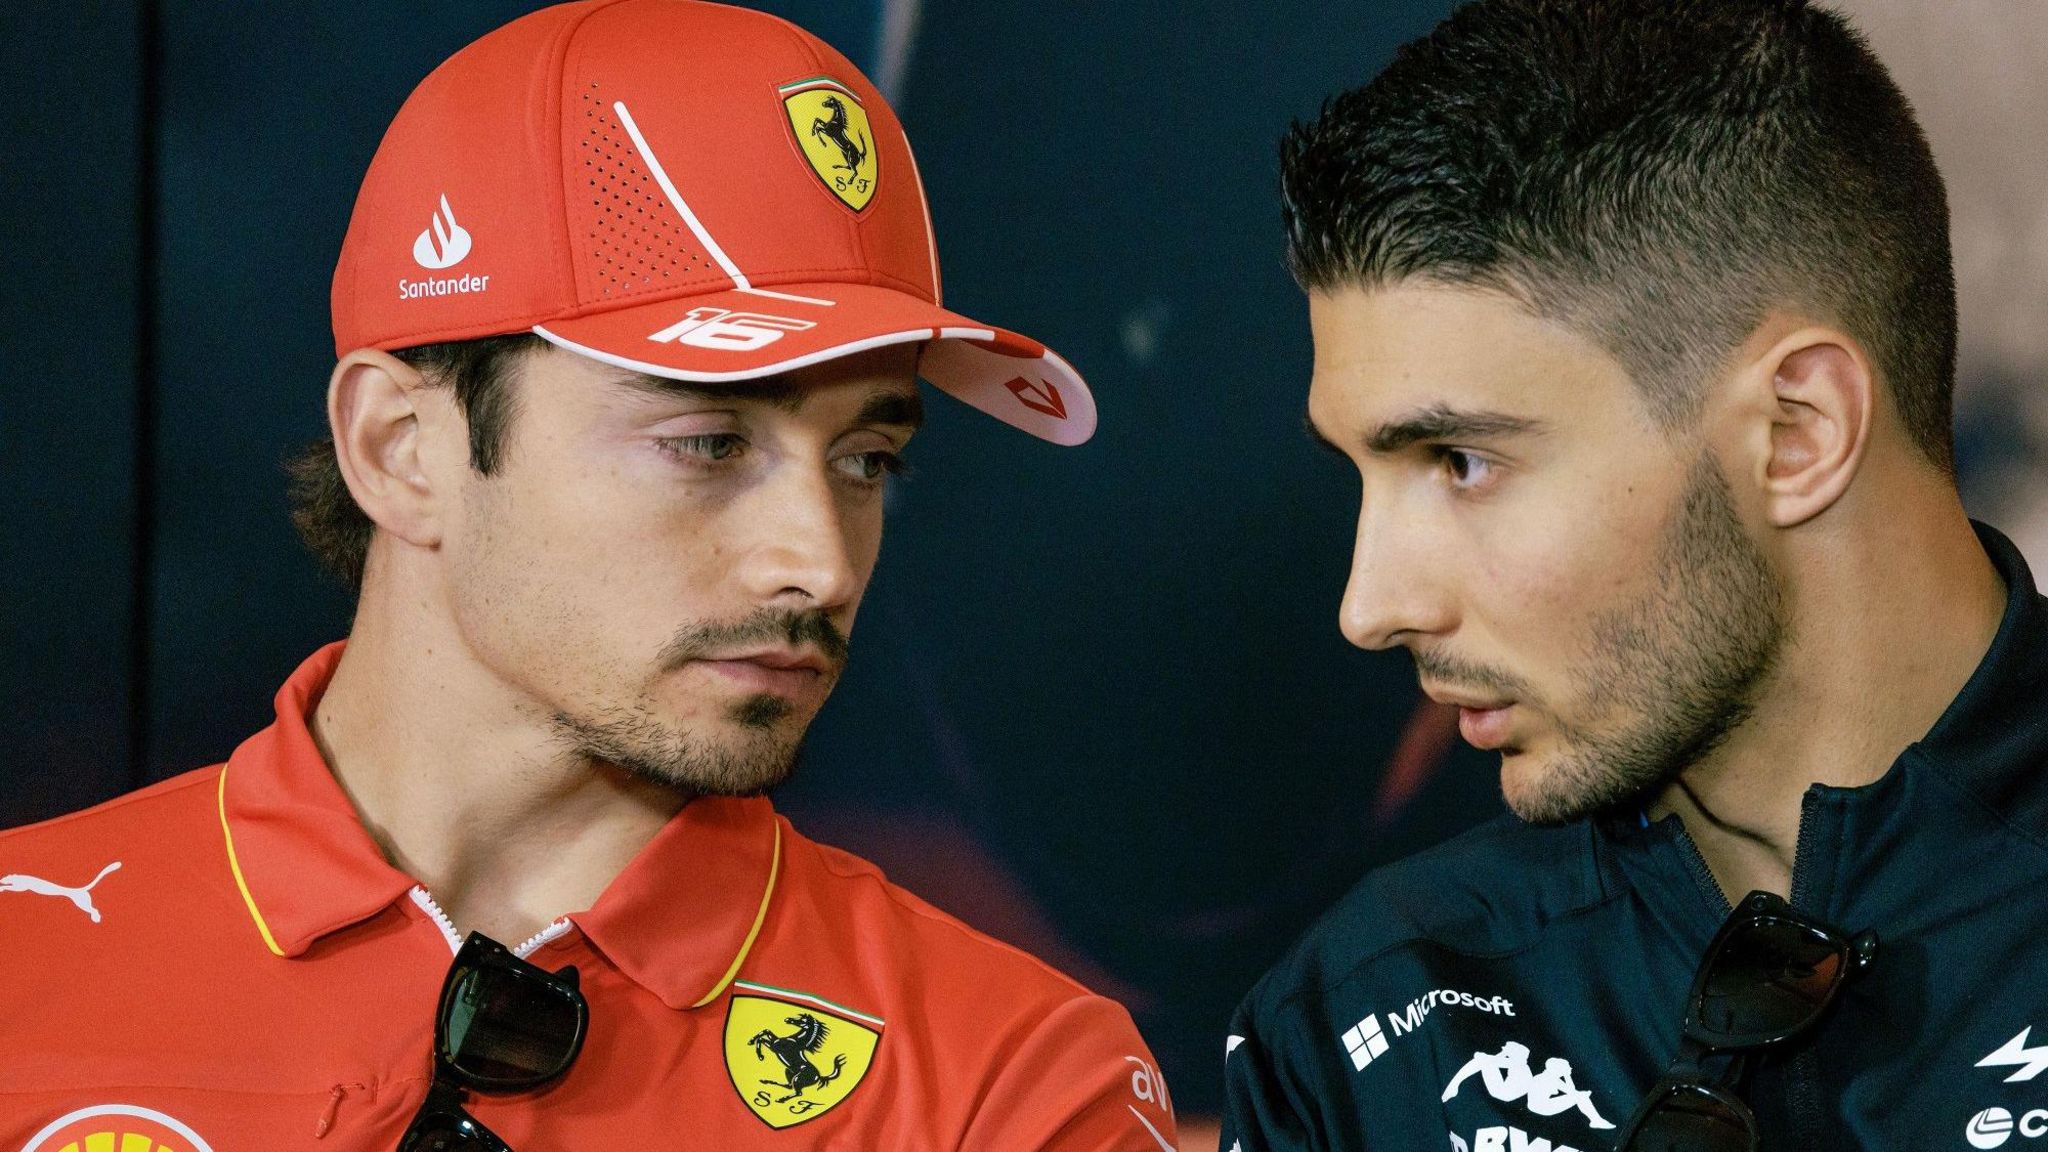 Ferrari's Charles Leclerc, left, and Esteban Ocon, of Alpine, in discussion ahead of the China Grand Prix